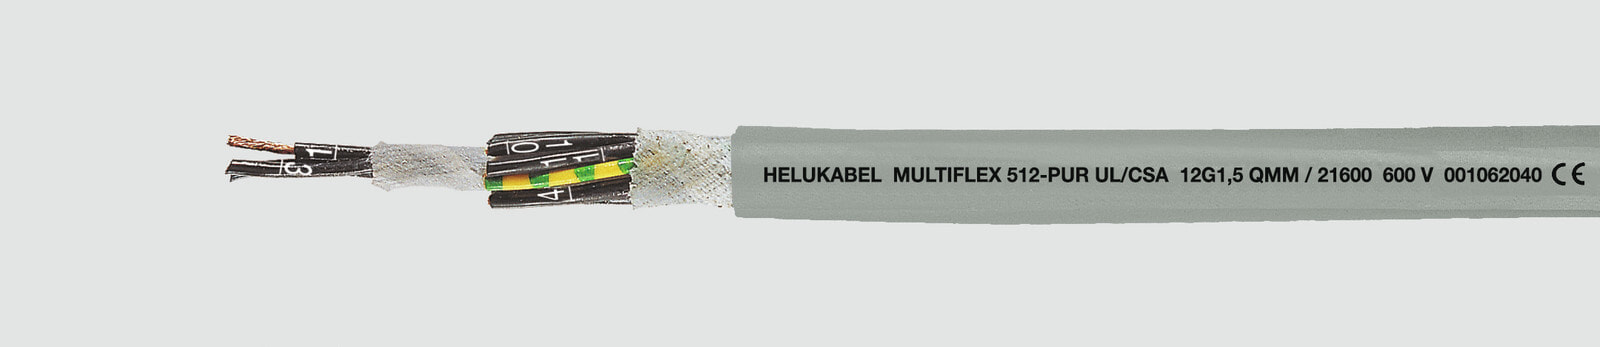 Helukabel MULTIFLEX 512-PUR UL/CSA - Medium voltage cable - Grey - Polyvinyl chloride (PVC) - Cooper - 3 G 0.75 - 21.6 kg/km